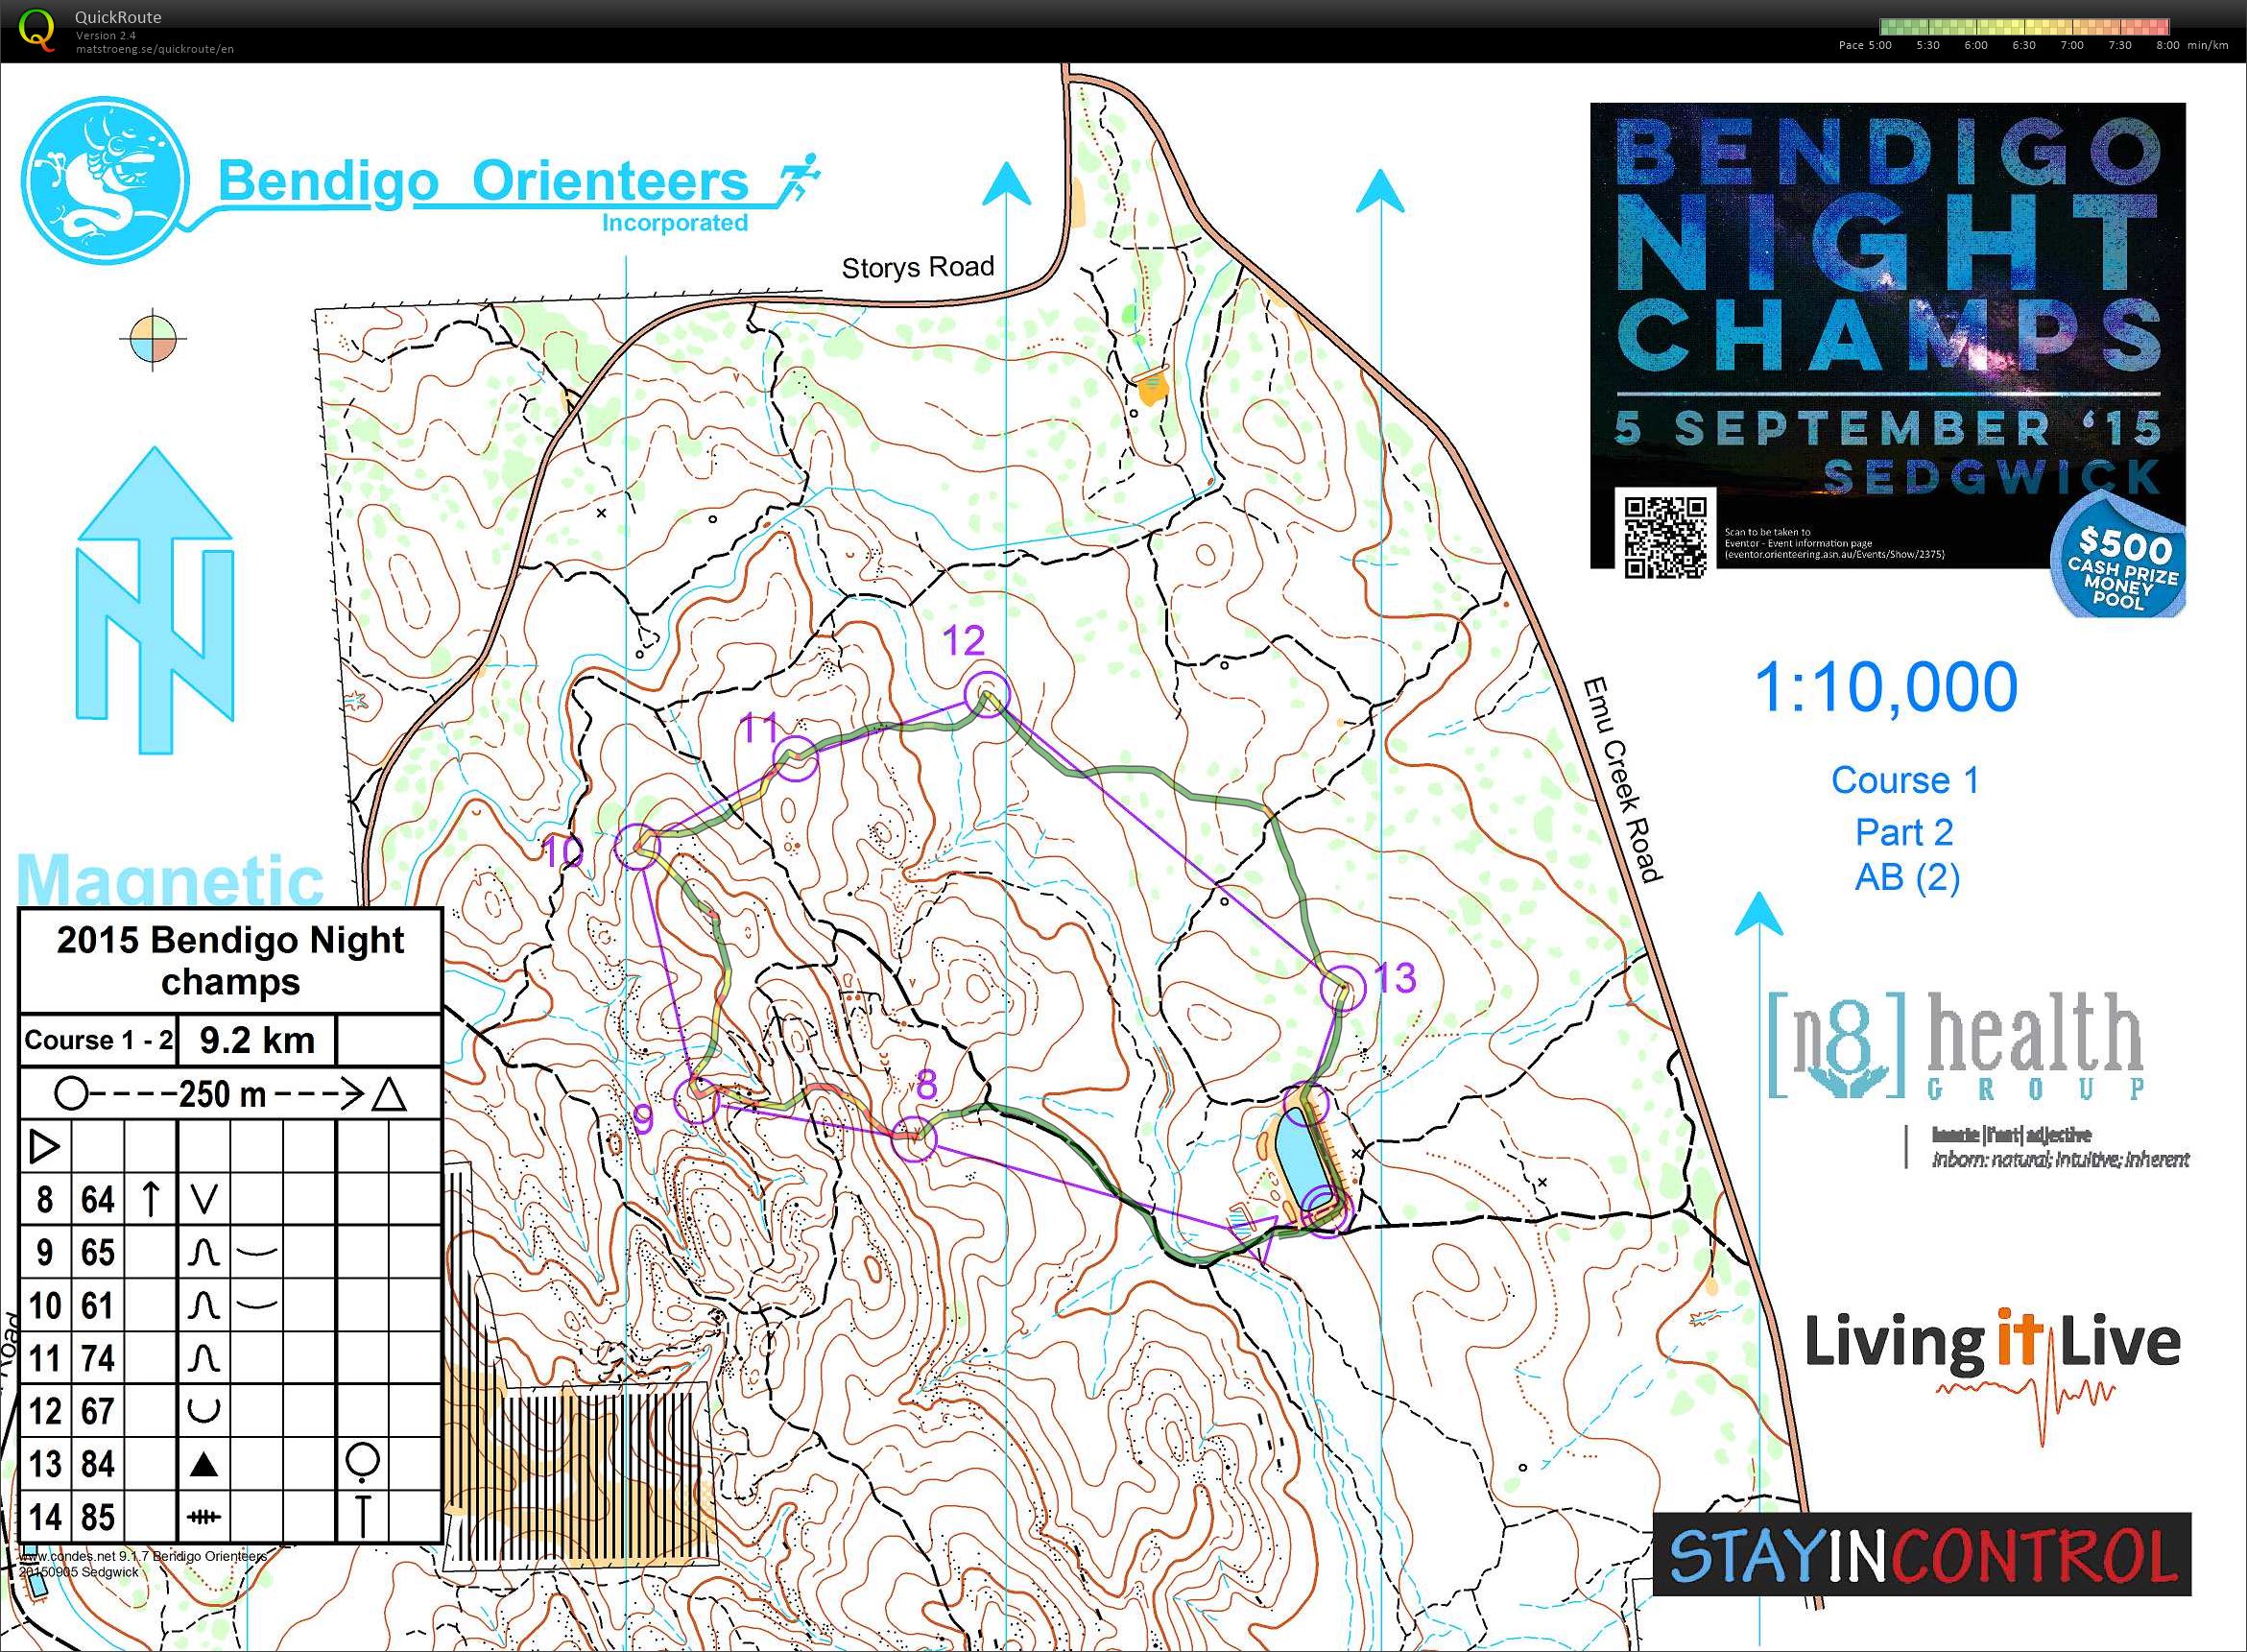 2015 Bendigo Night Champs - Map 2 (05/09/2015)